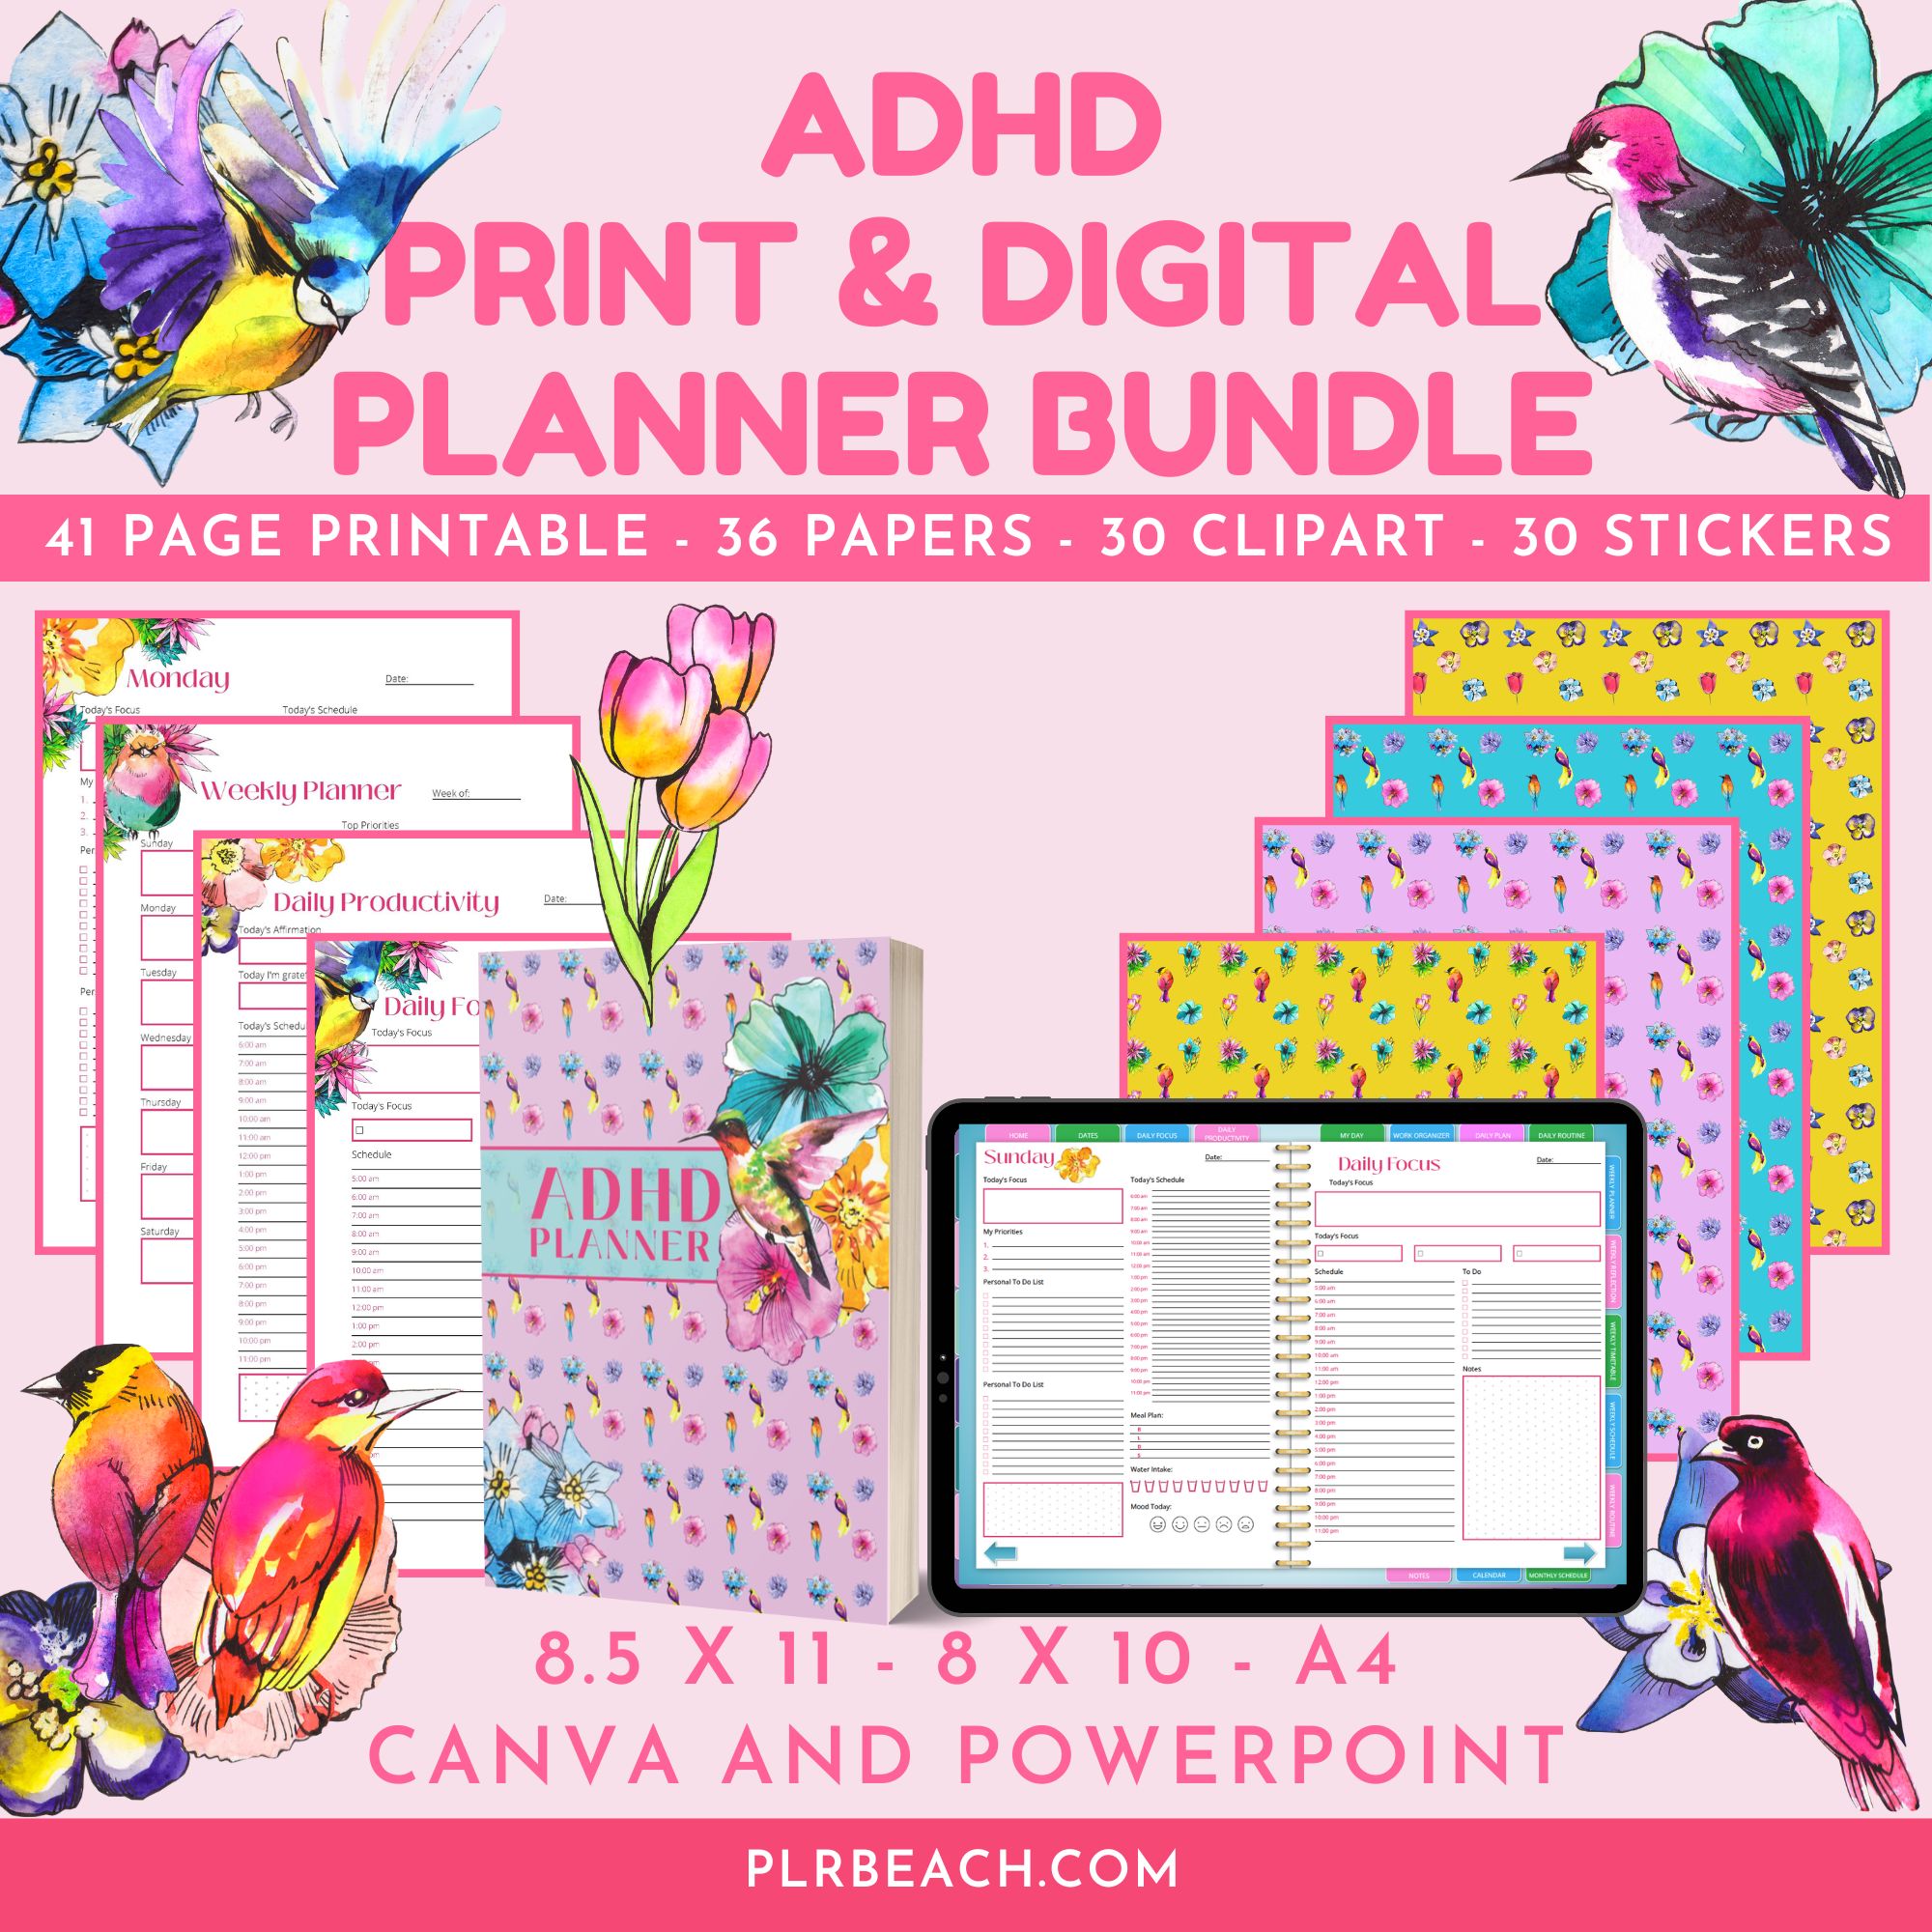 ADHD Print And Digital Planner